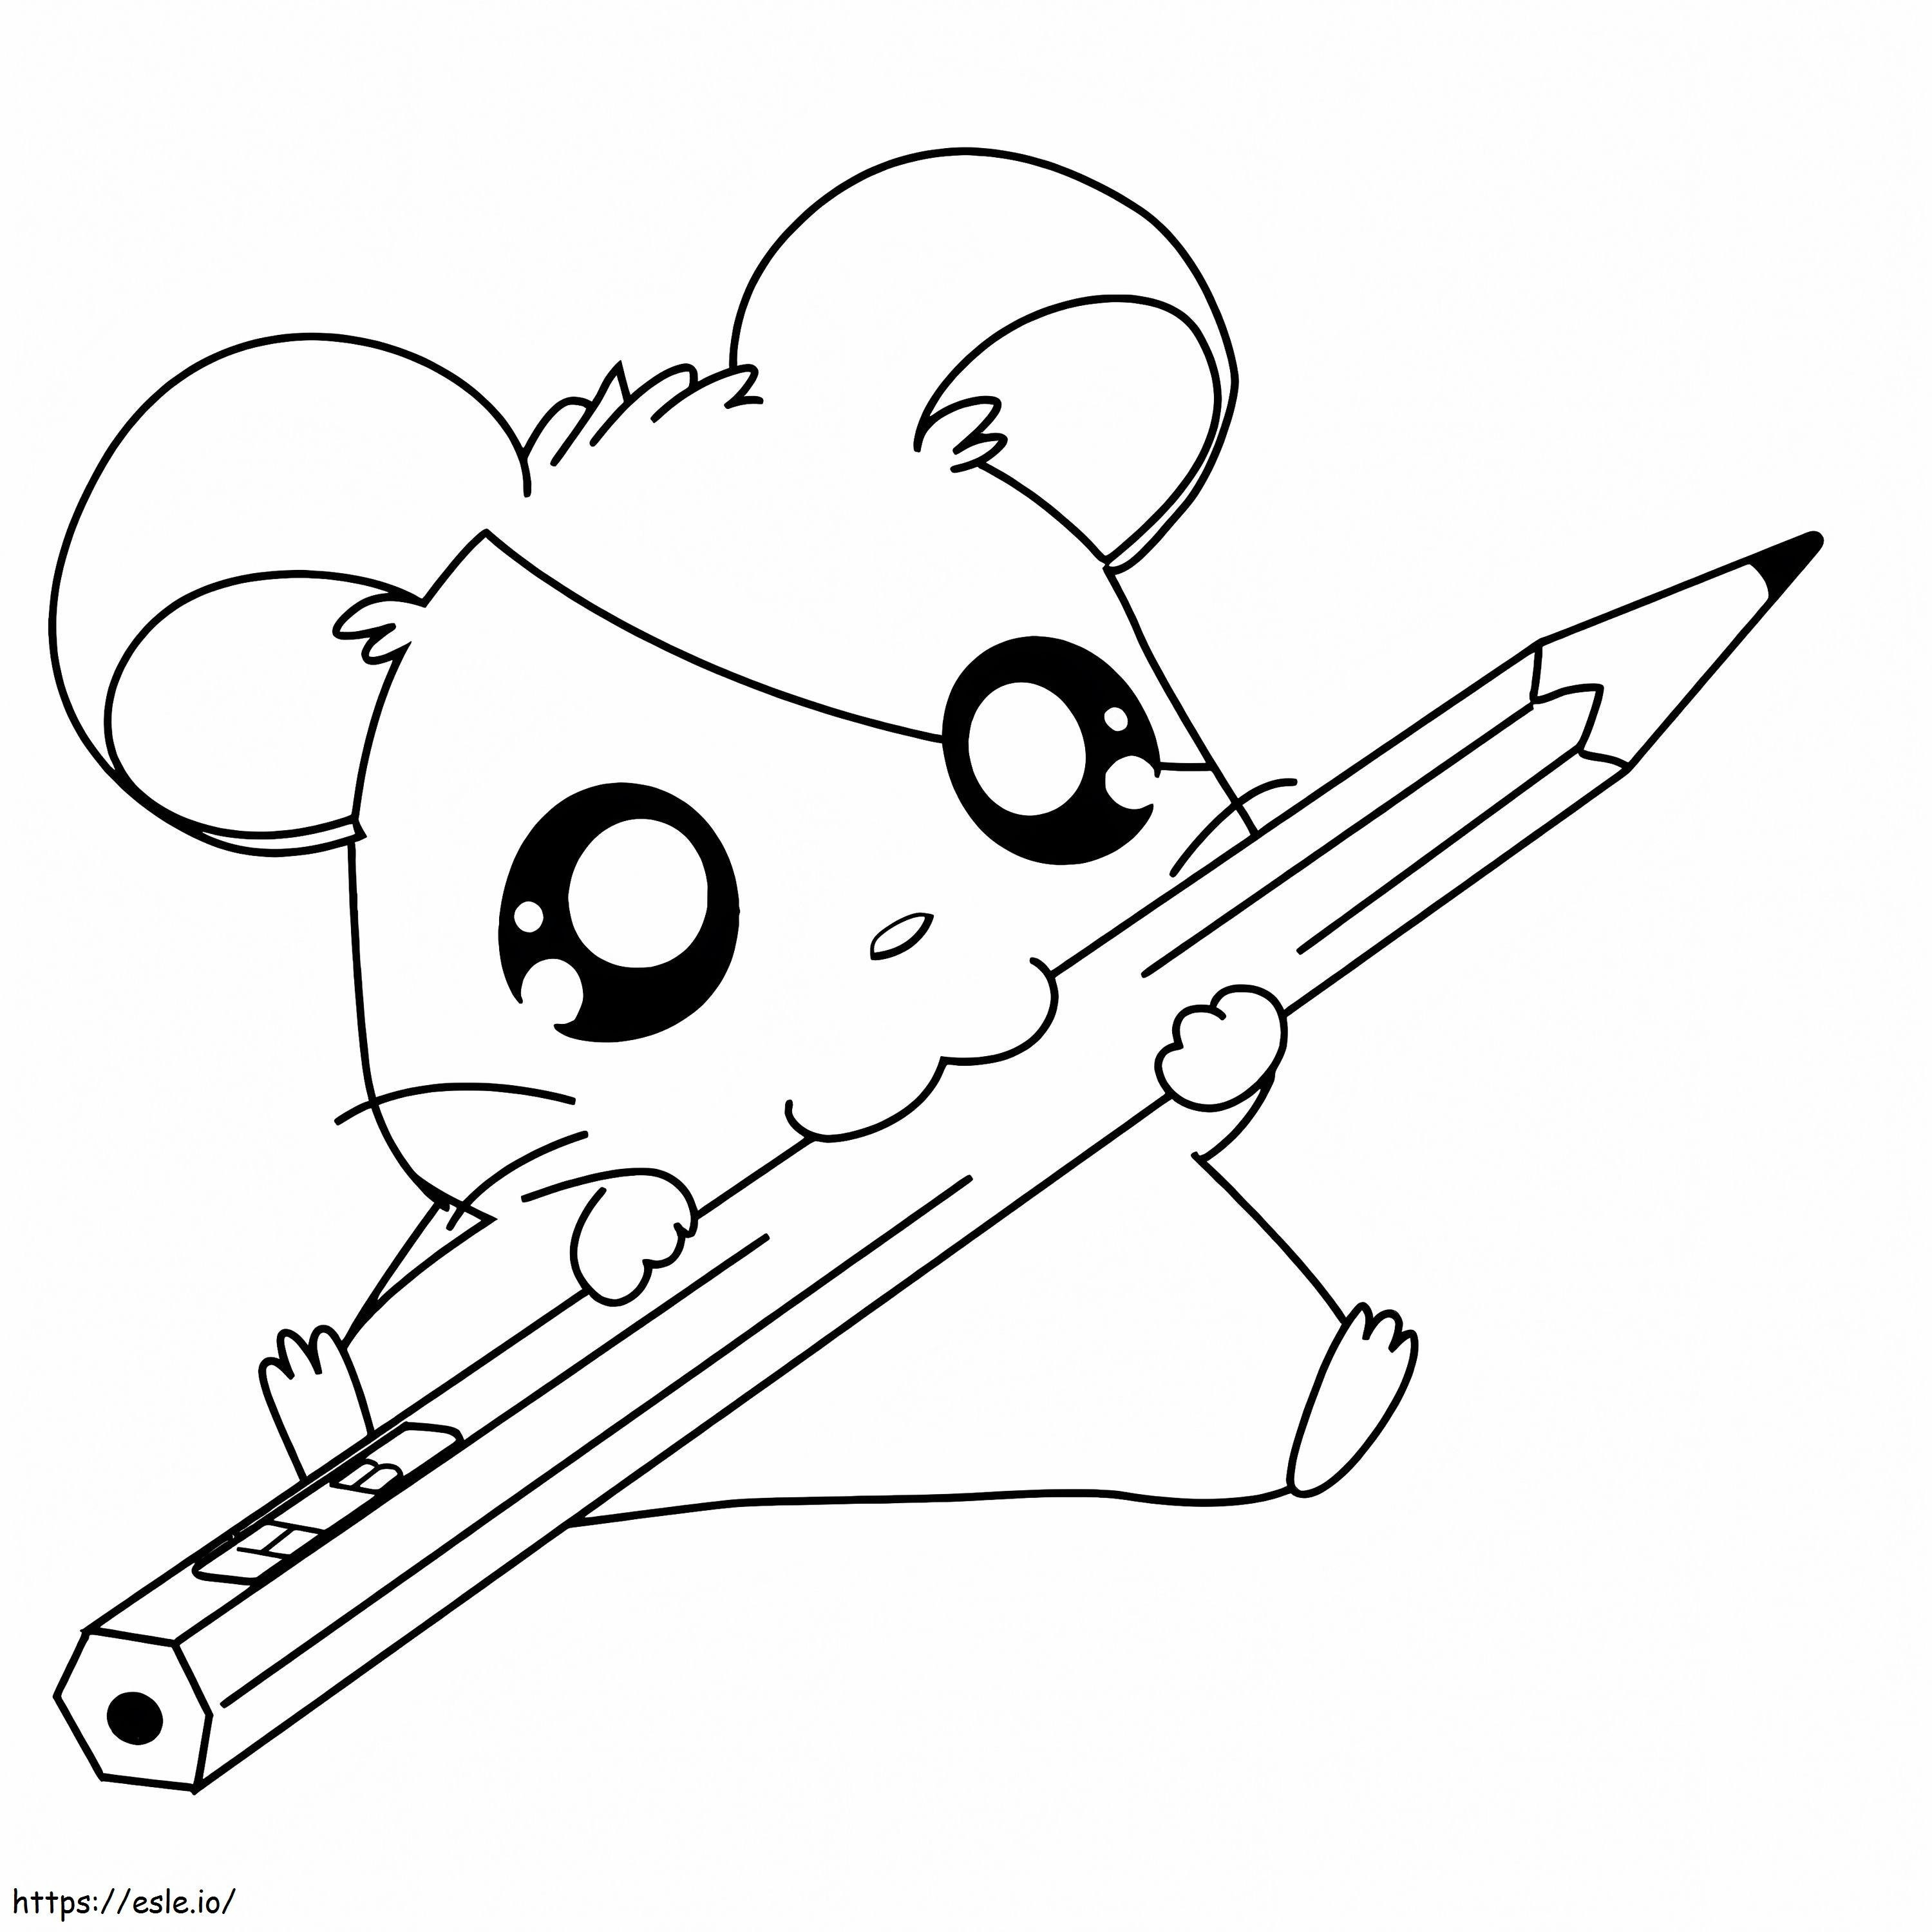 Rabbit With Pencil Kawaii coloring page